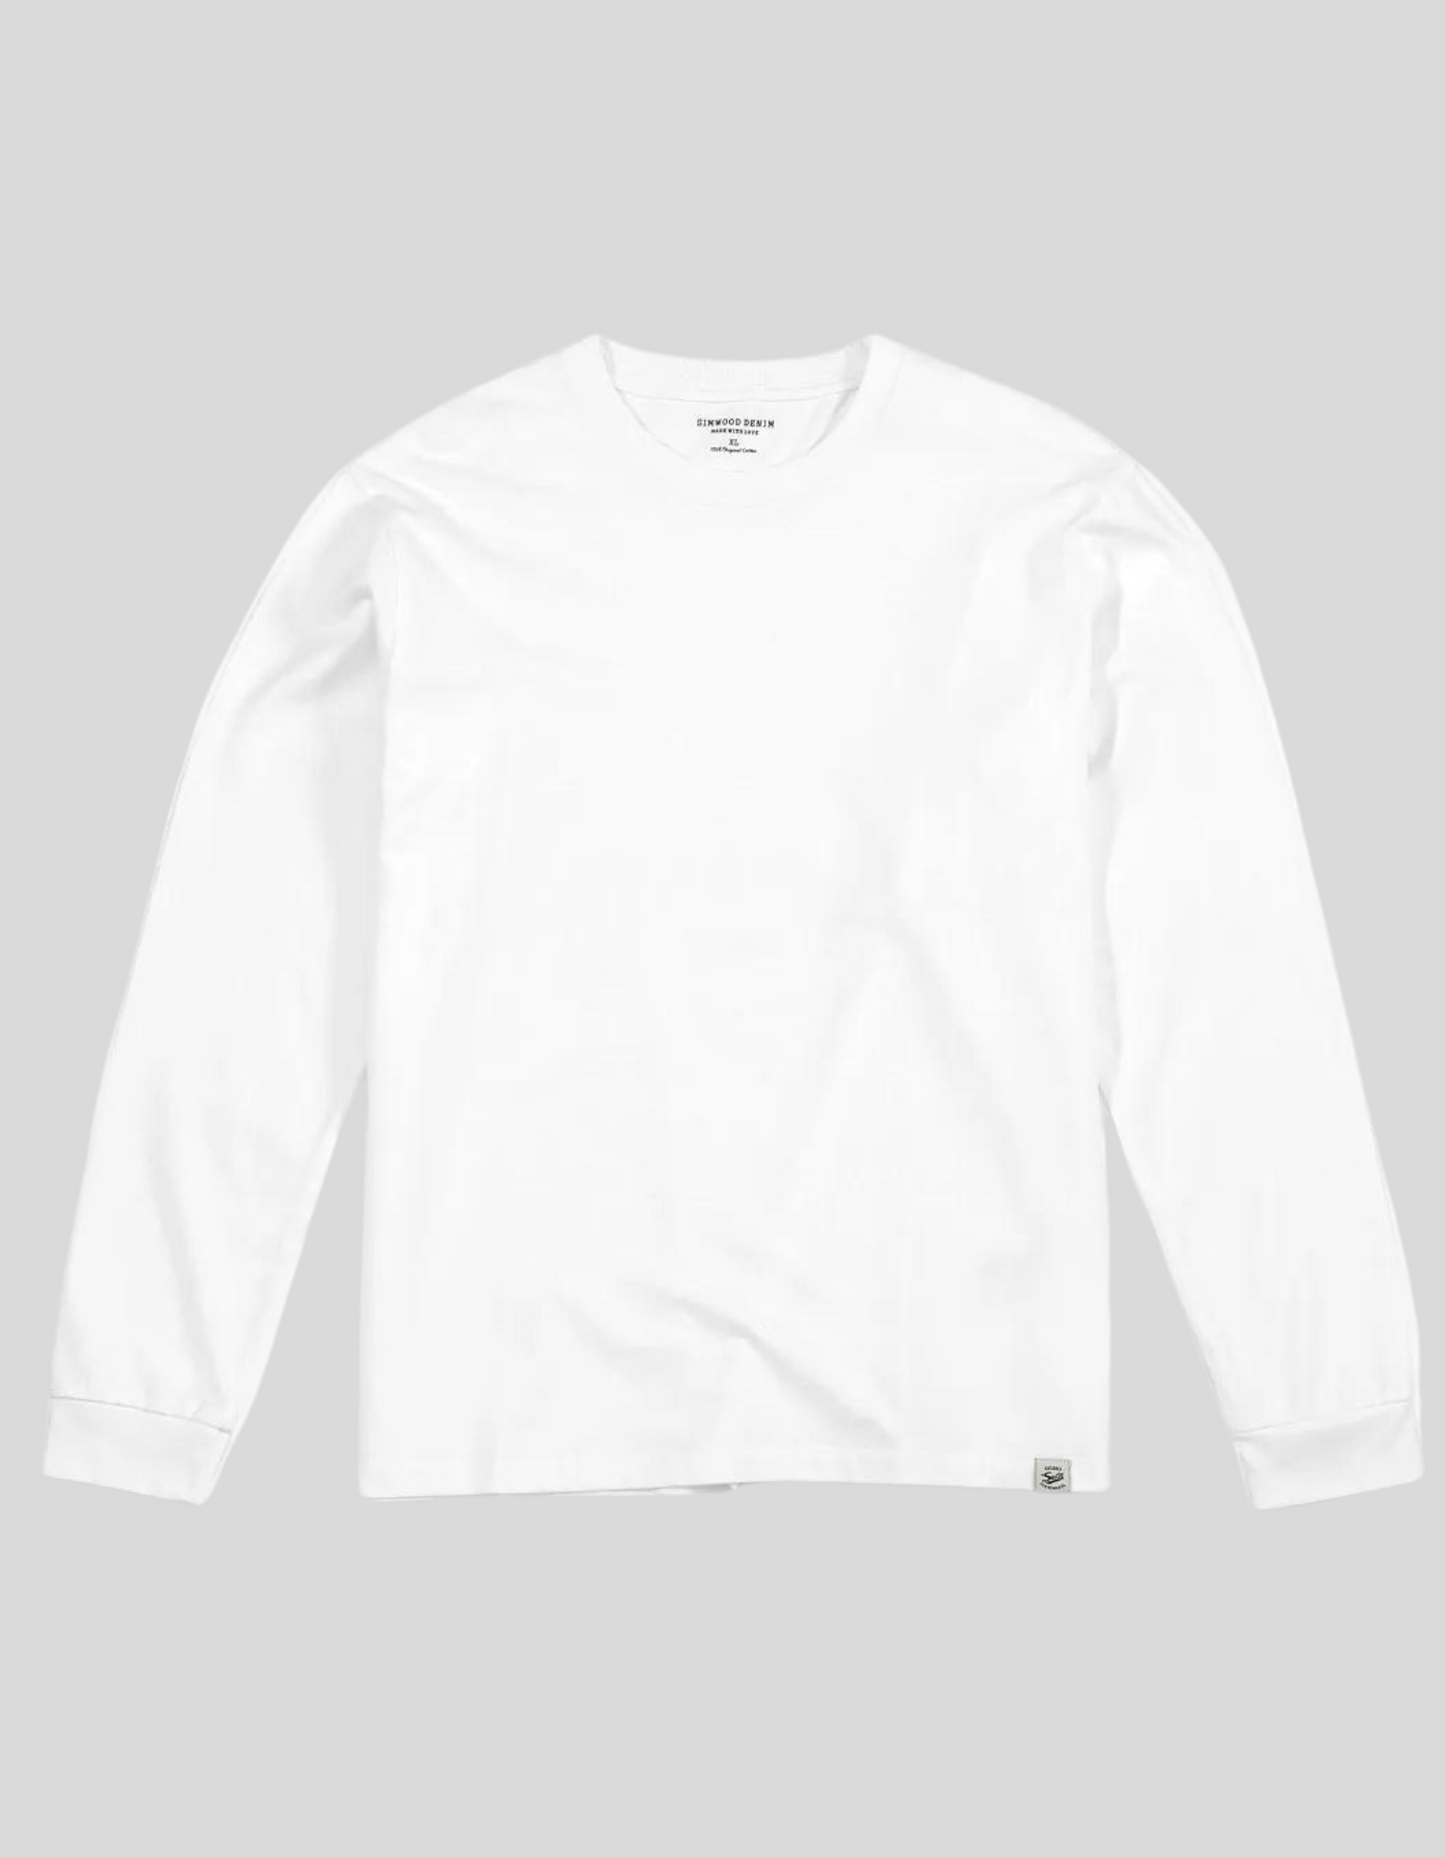 SIMWOOD Men's Long Sleeve White T Shirt 100% Cotton